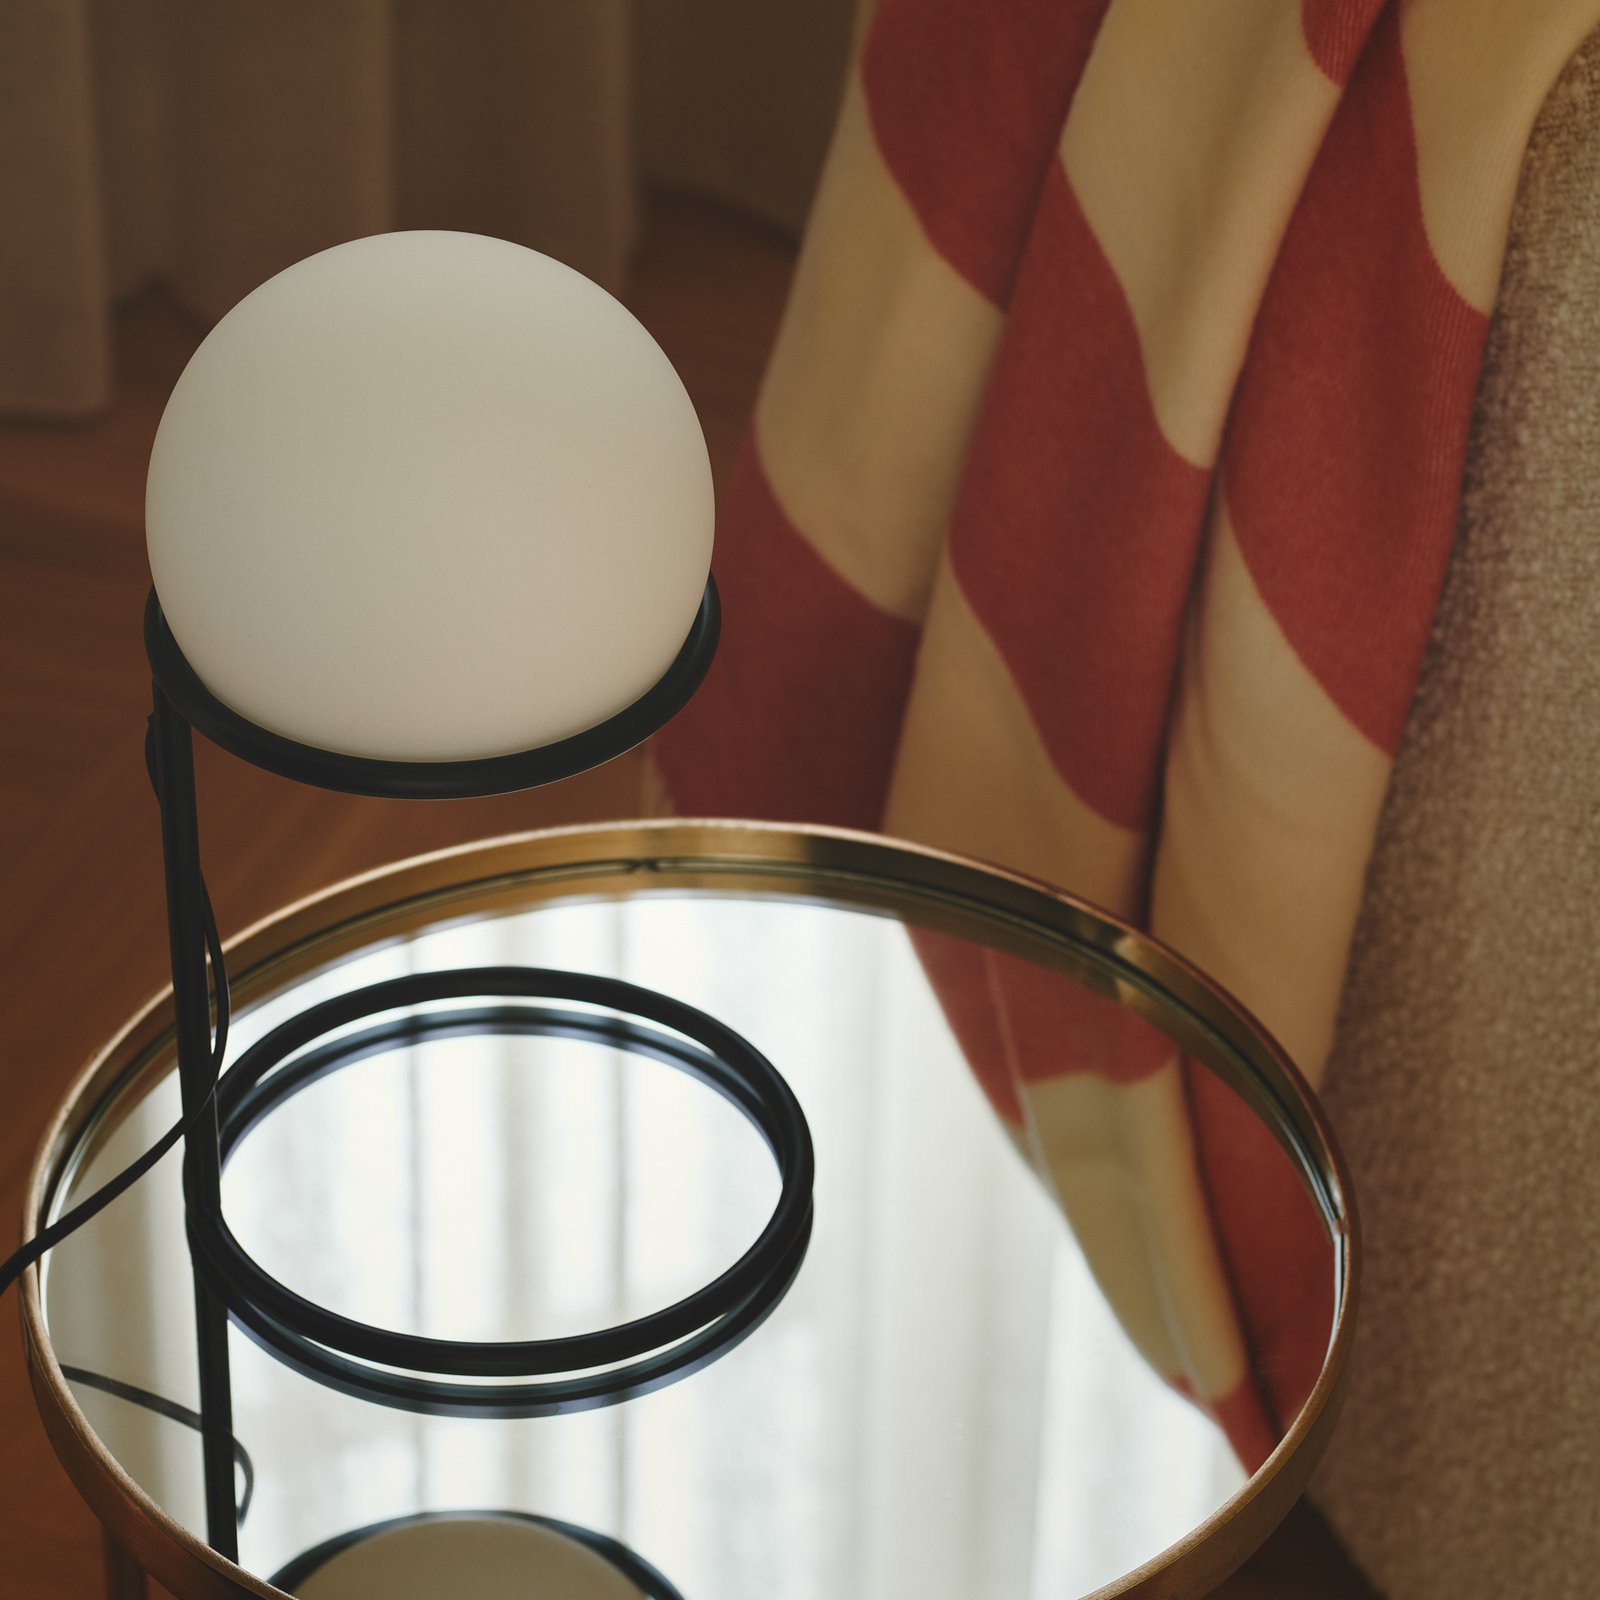 Wilson lámpara de mesa, metal, negro, pantalla globo de cristal